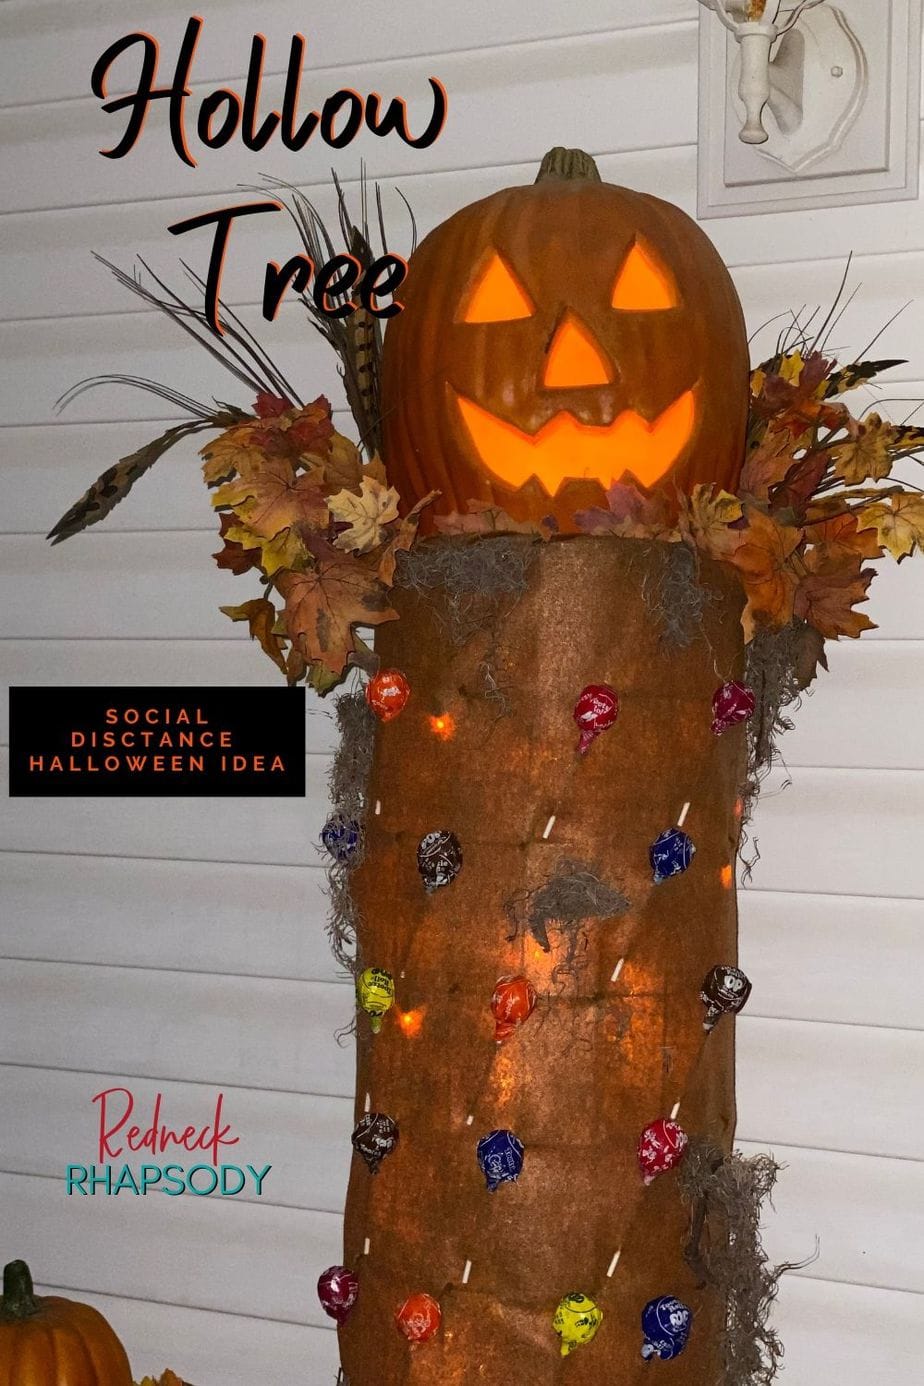 DIY Hollow Tree Pin - Wire & felt tree with suckers & pumpkin in top